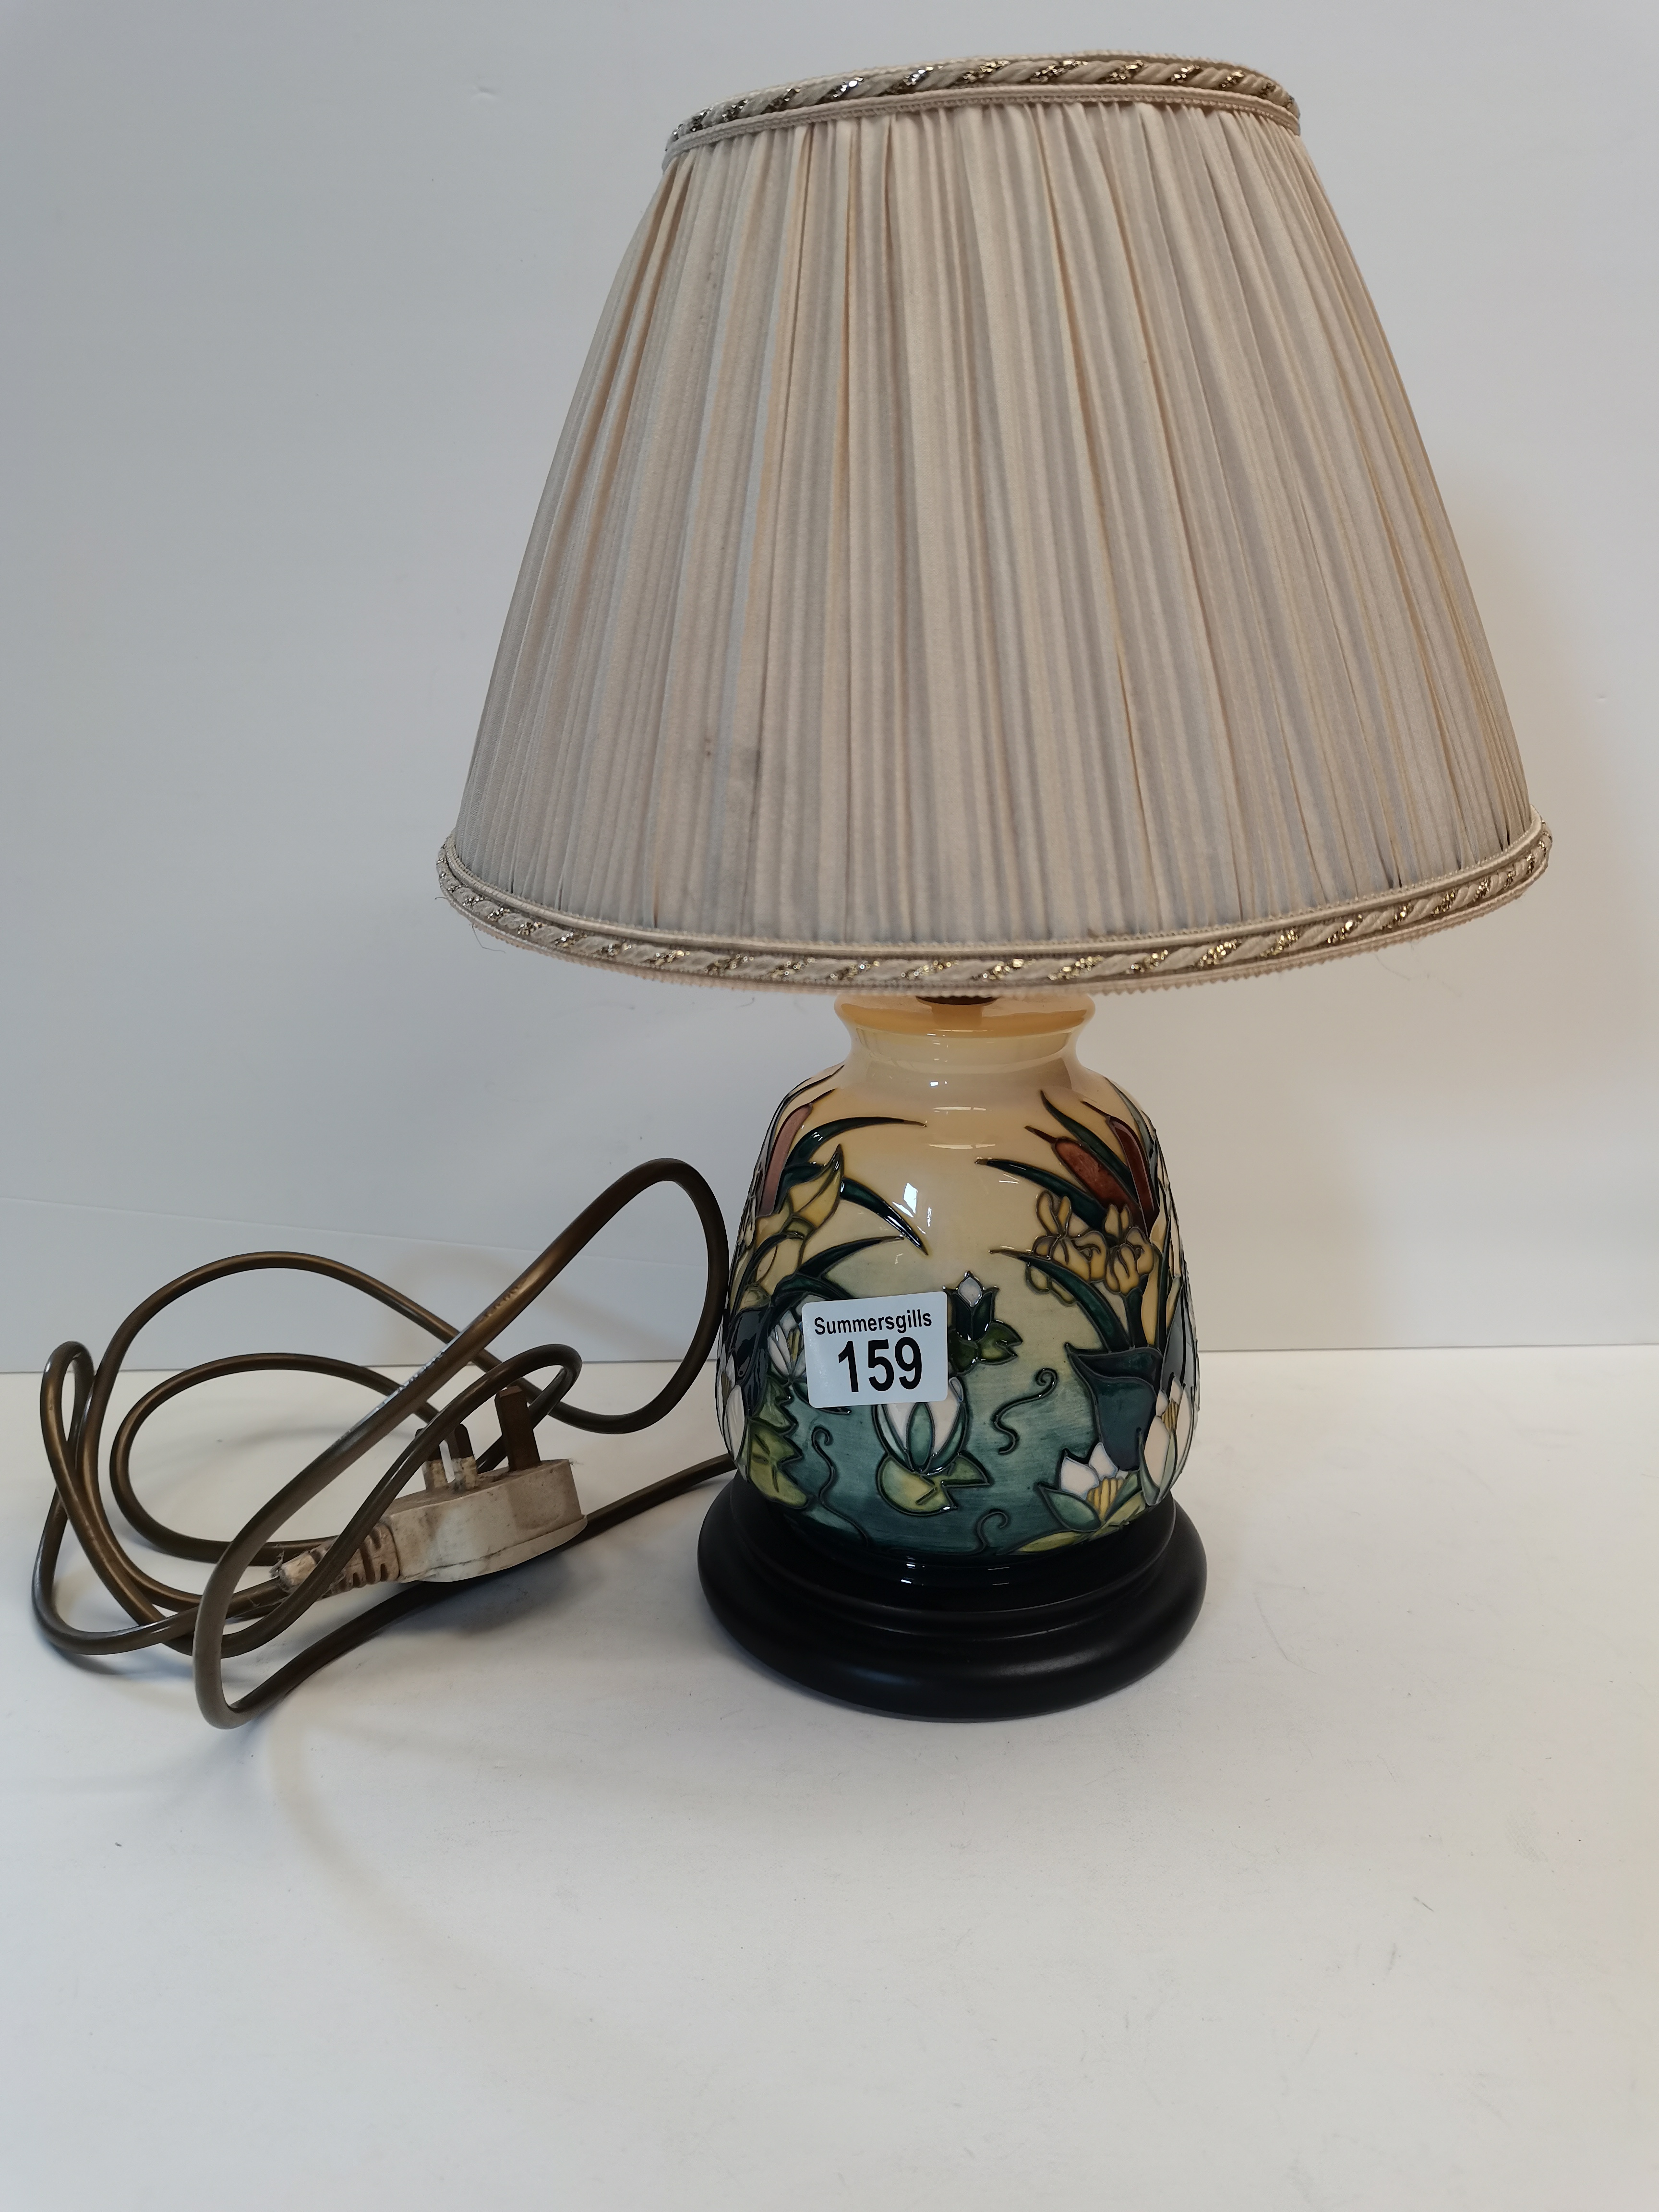 Moorcroft table lamp - Image 2 of 4